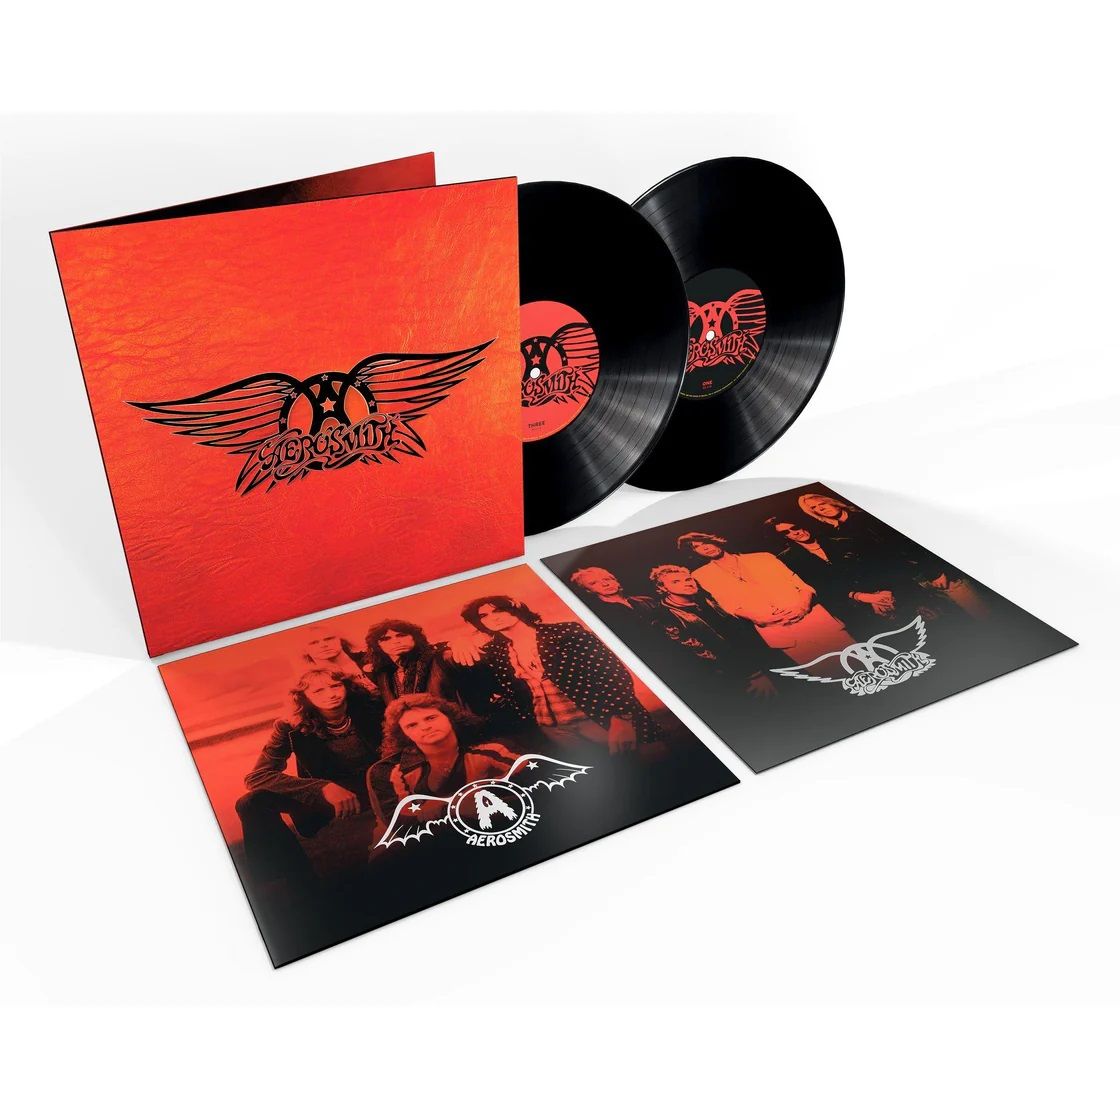 Aerosmith - Greatest Hits (Expanded Ed. 2LP gatefold) - Vinyl - New